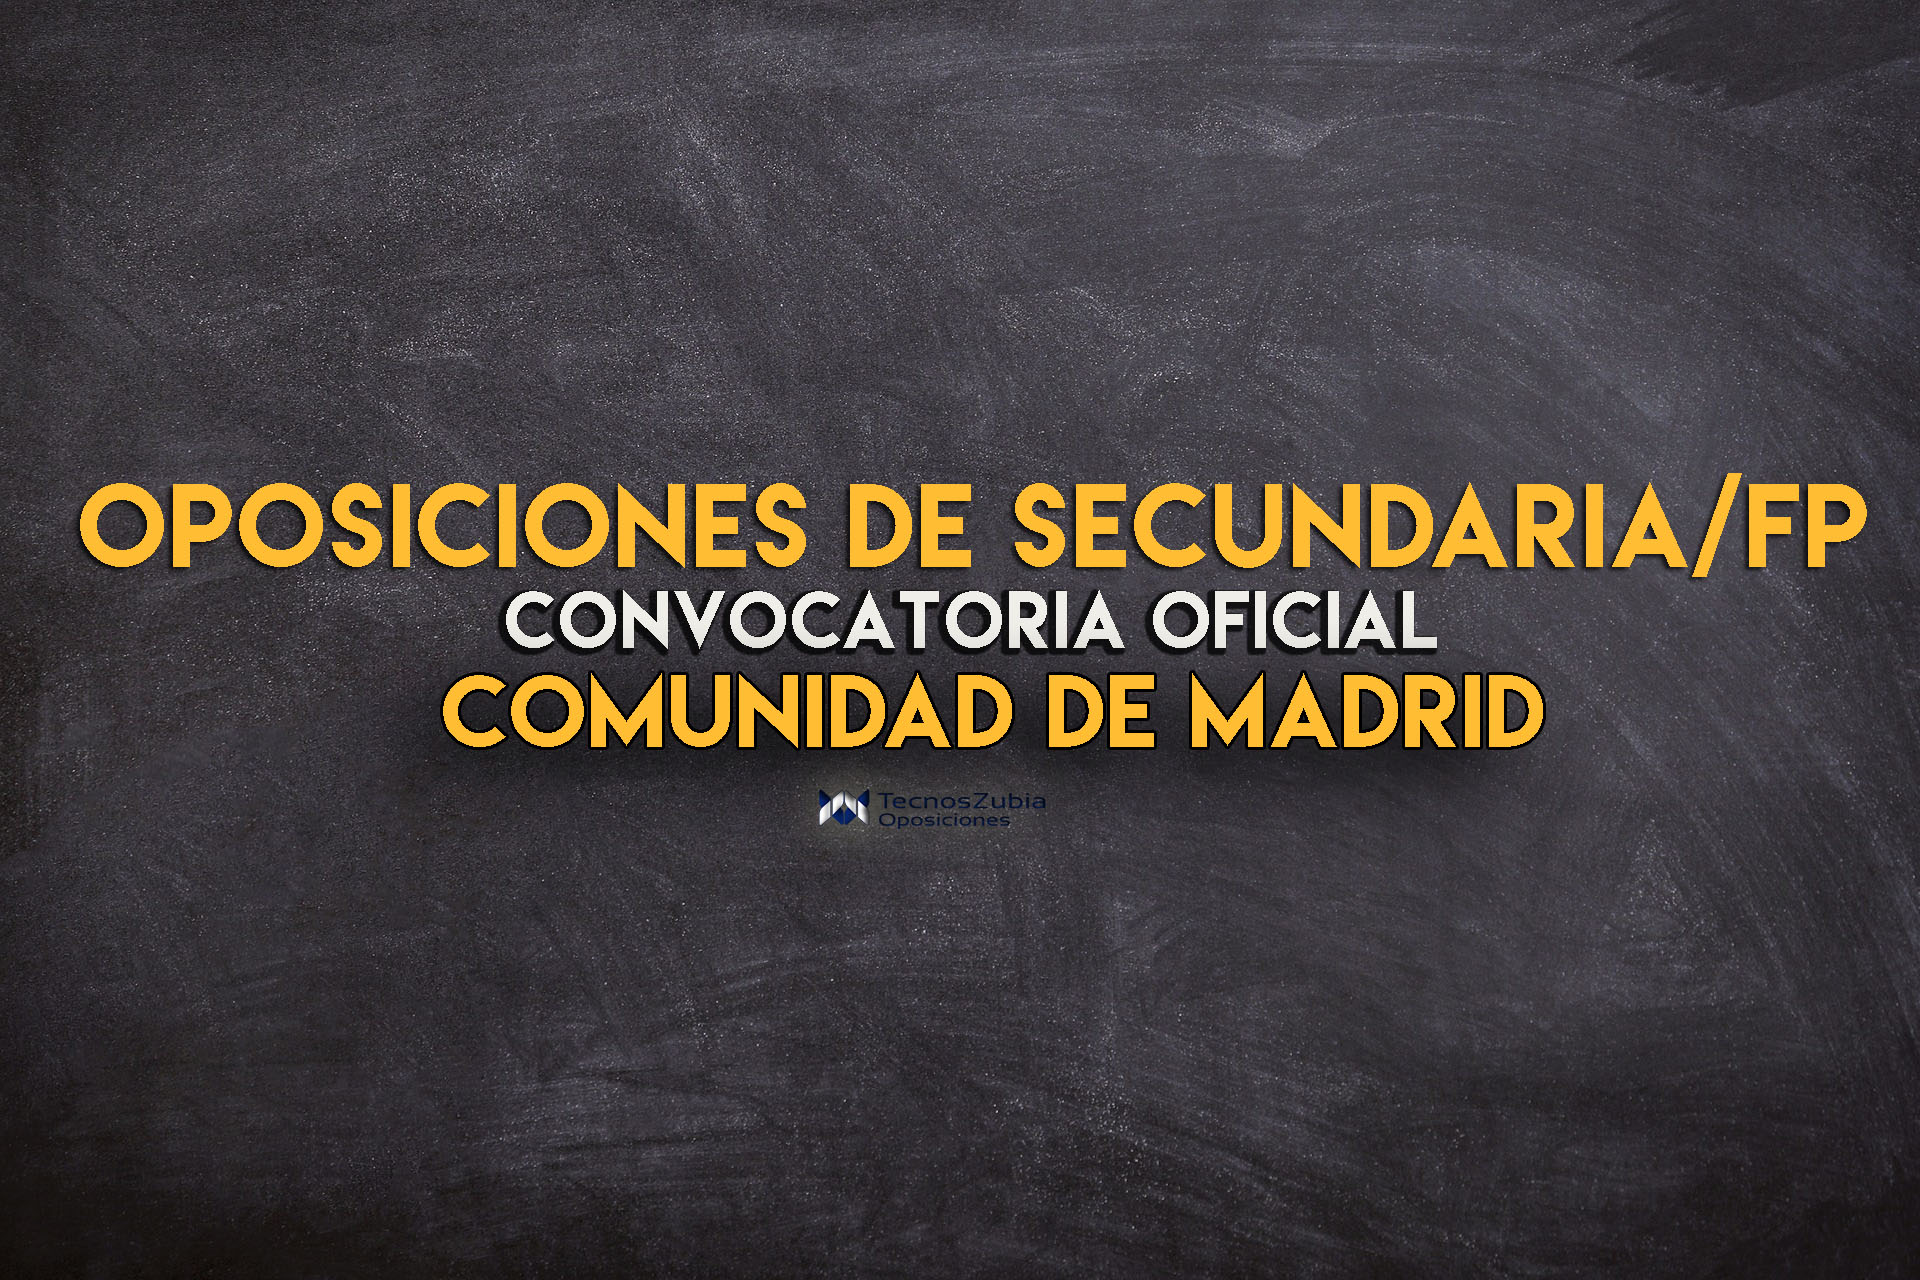 Convocatoria oficial Comunidad Madrid. Oposiciones 2021 secundaria.